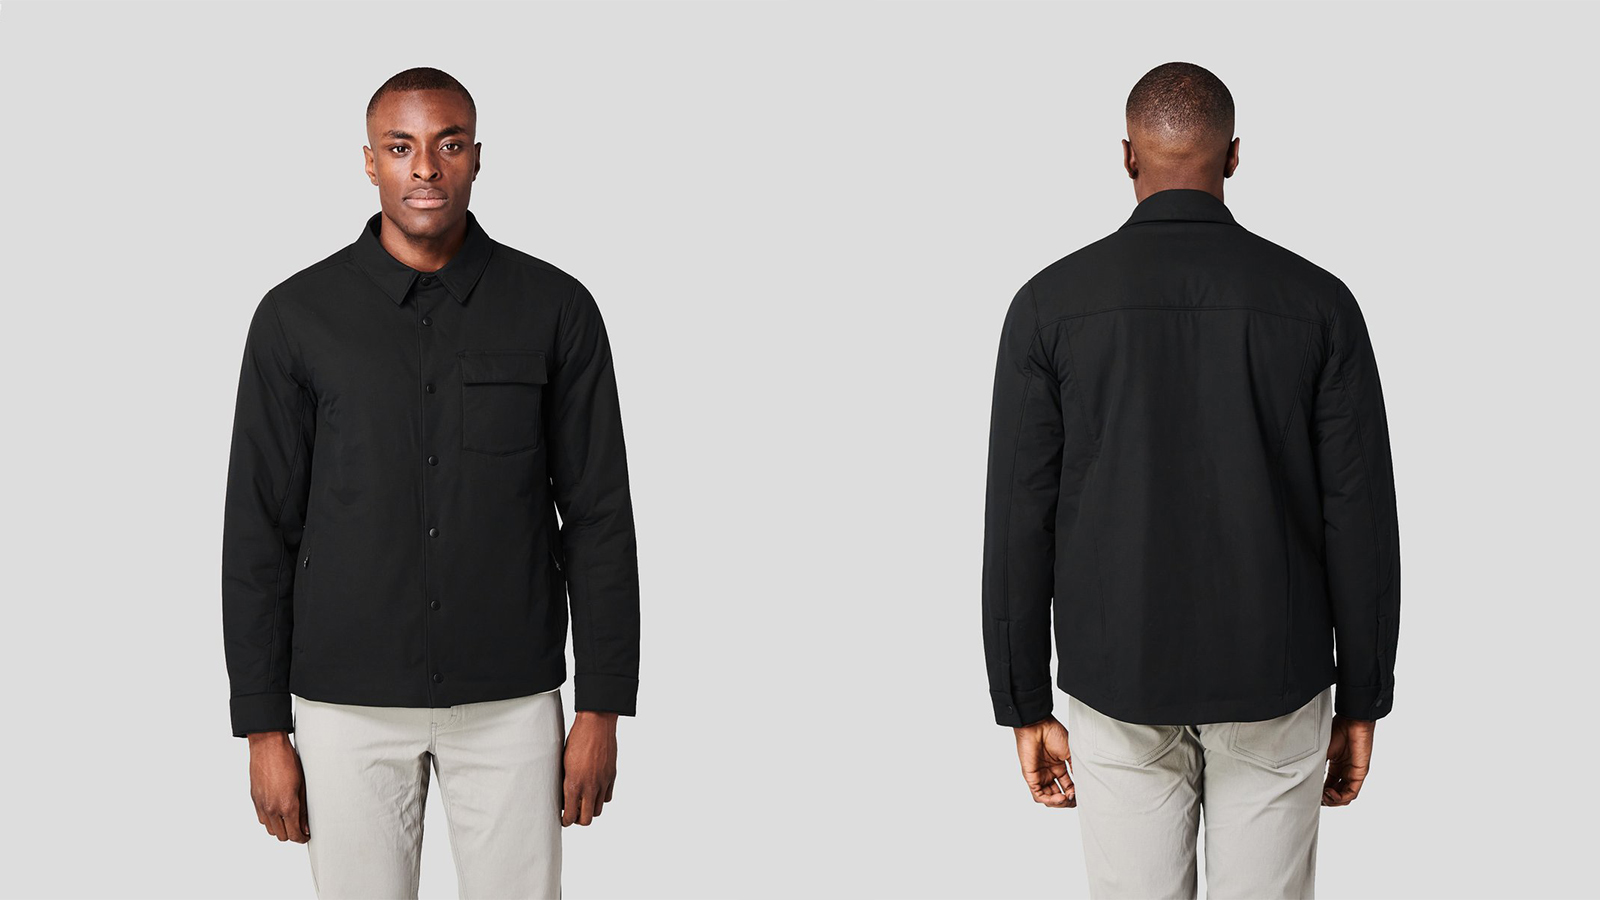 Introducing The Western Rise AirLoft Shirt Jacket - IMBOLDN